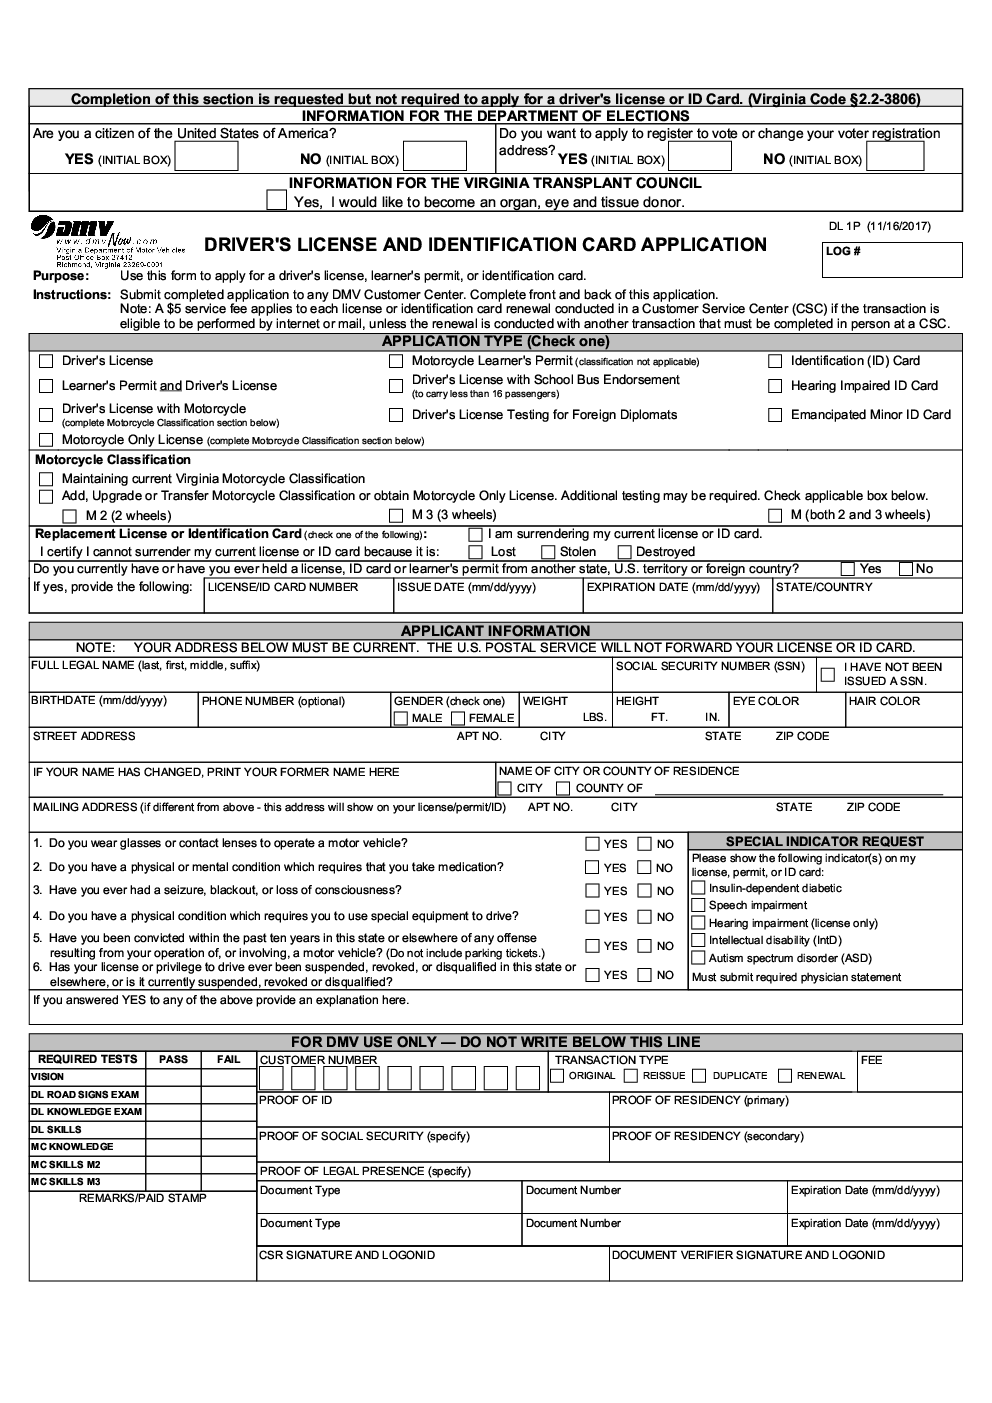 virginia driver's license application form